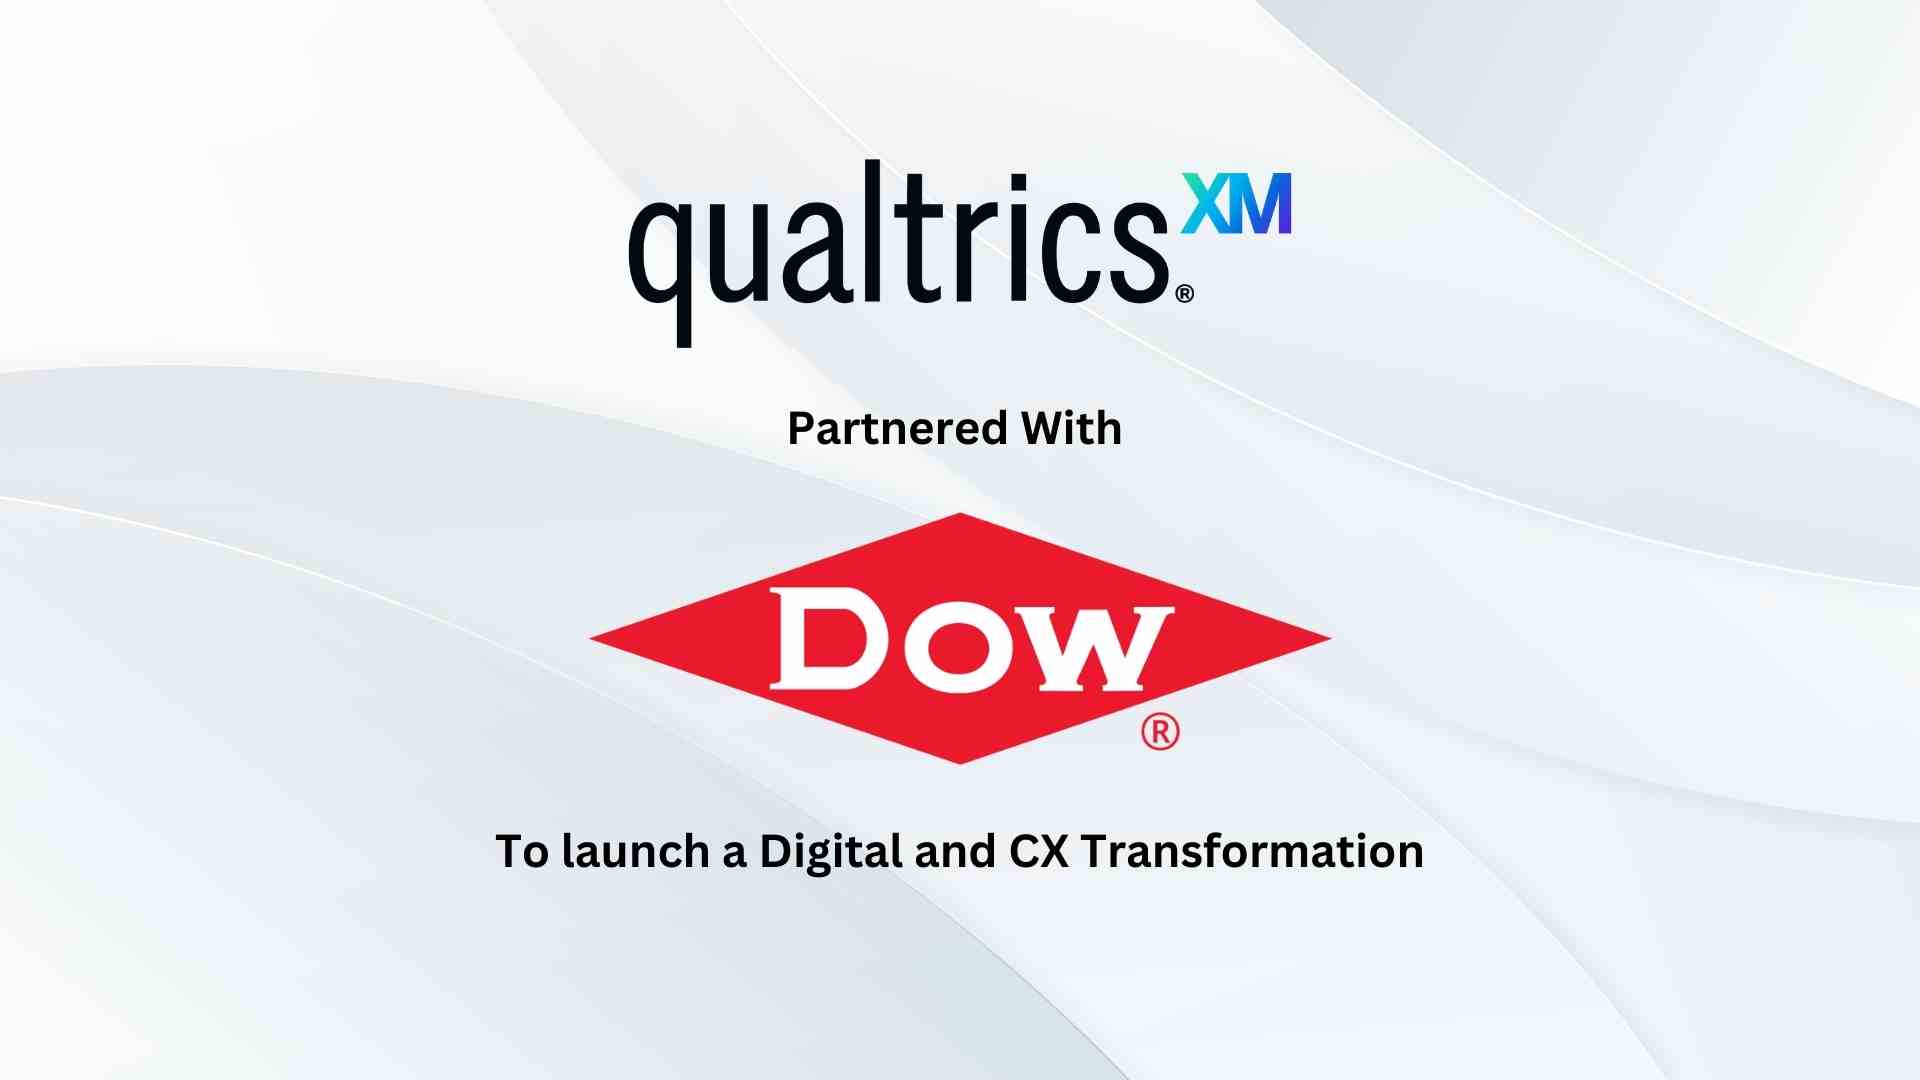 Qualtrics Insights Help Dow Unlock $300 Million in Value Through Digital and CX Transformation